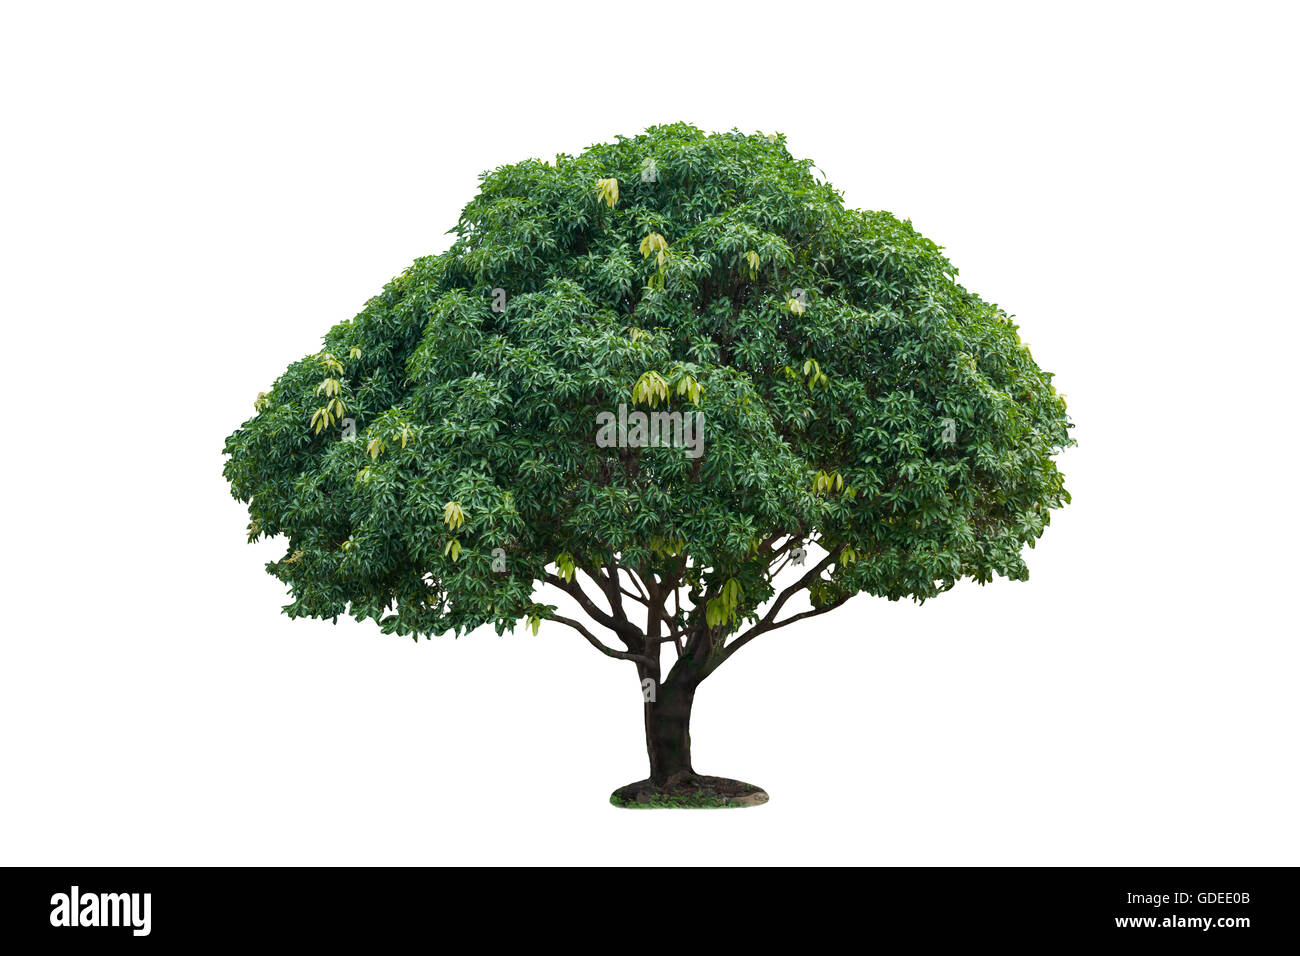 Mango Tree 3d Model Free Download